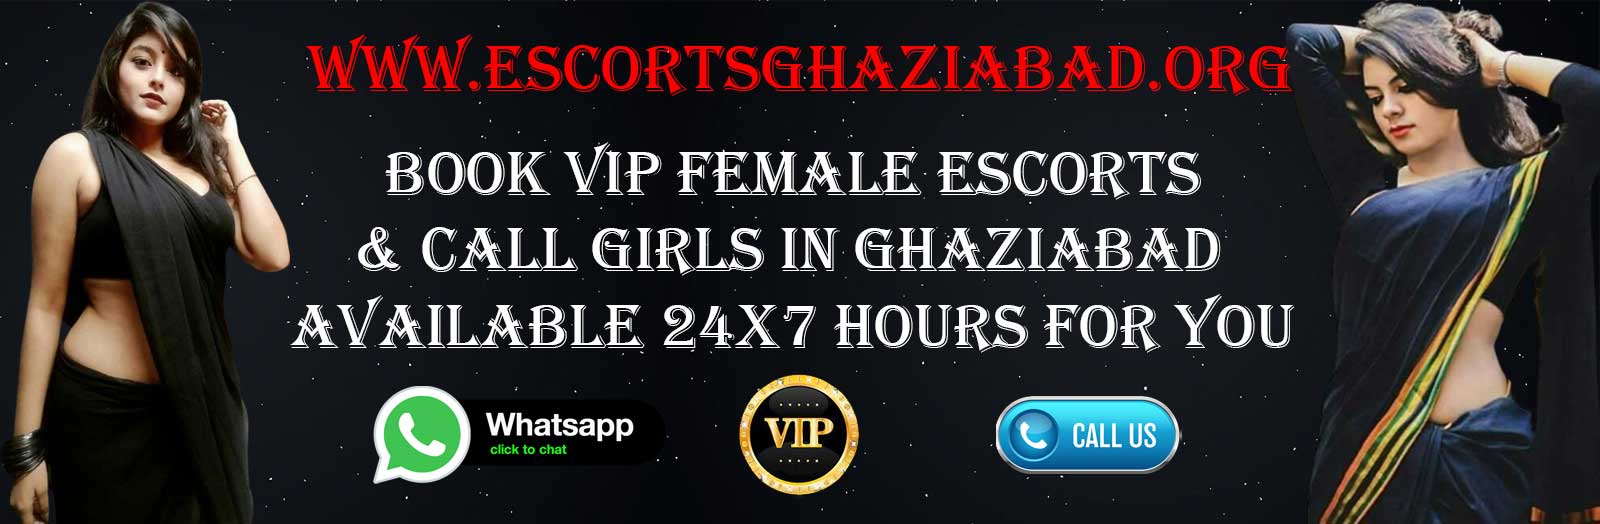 Ghaziabad escorts location